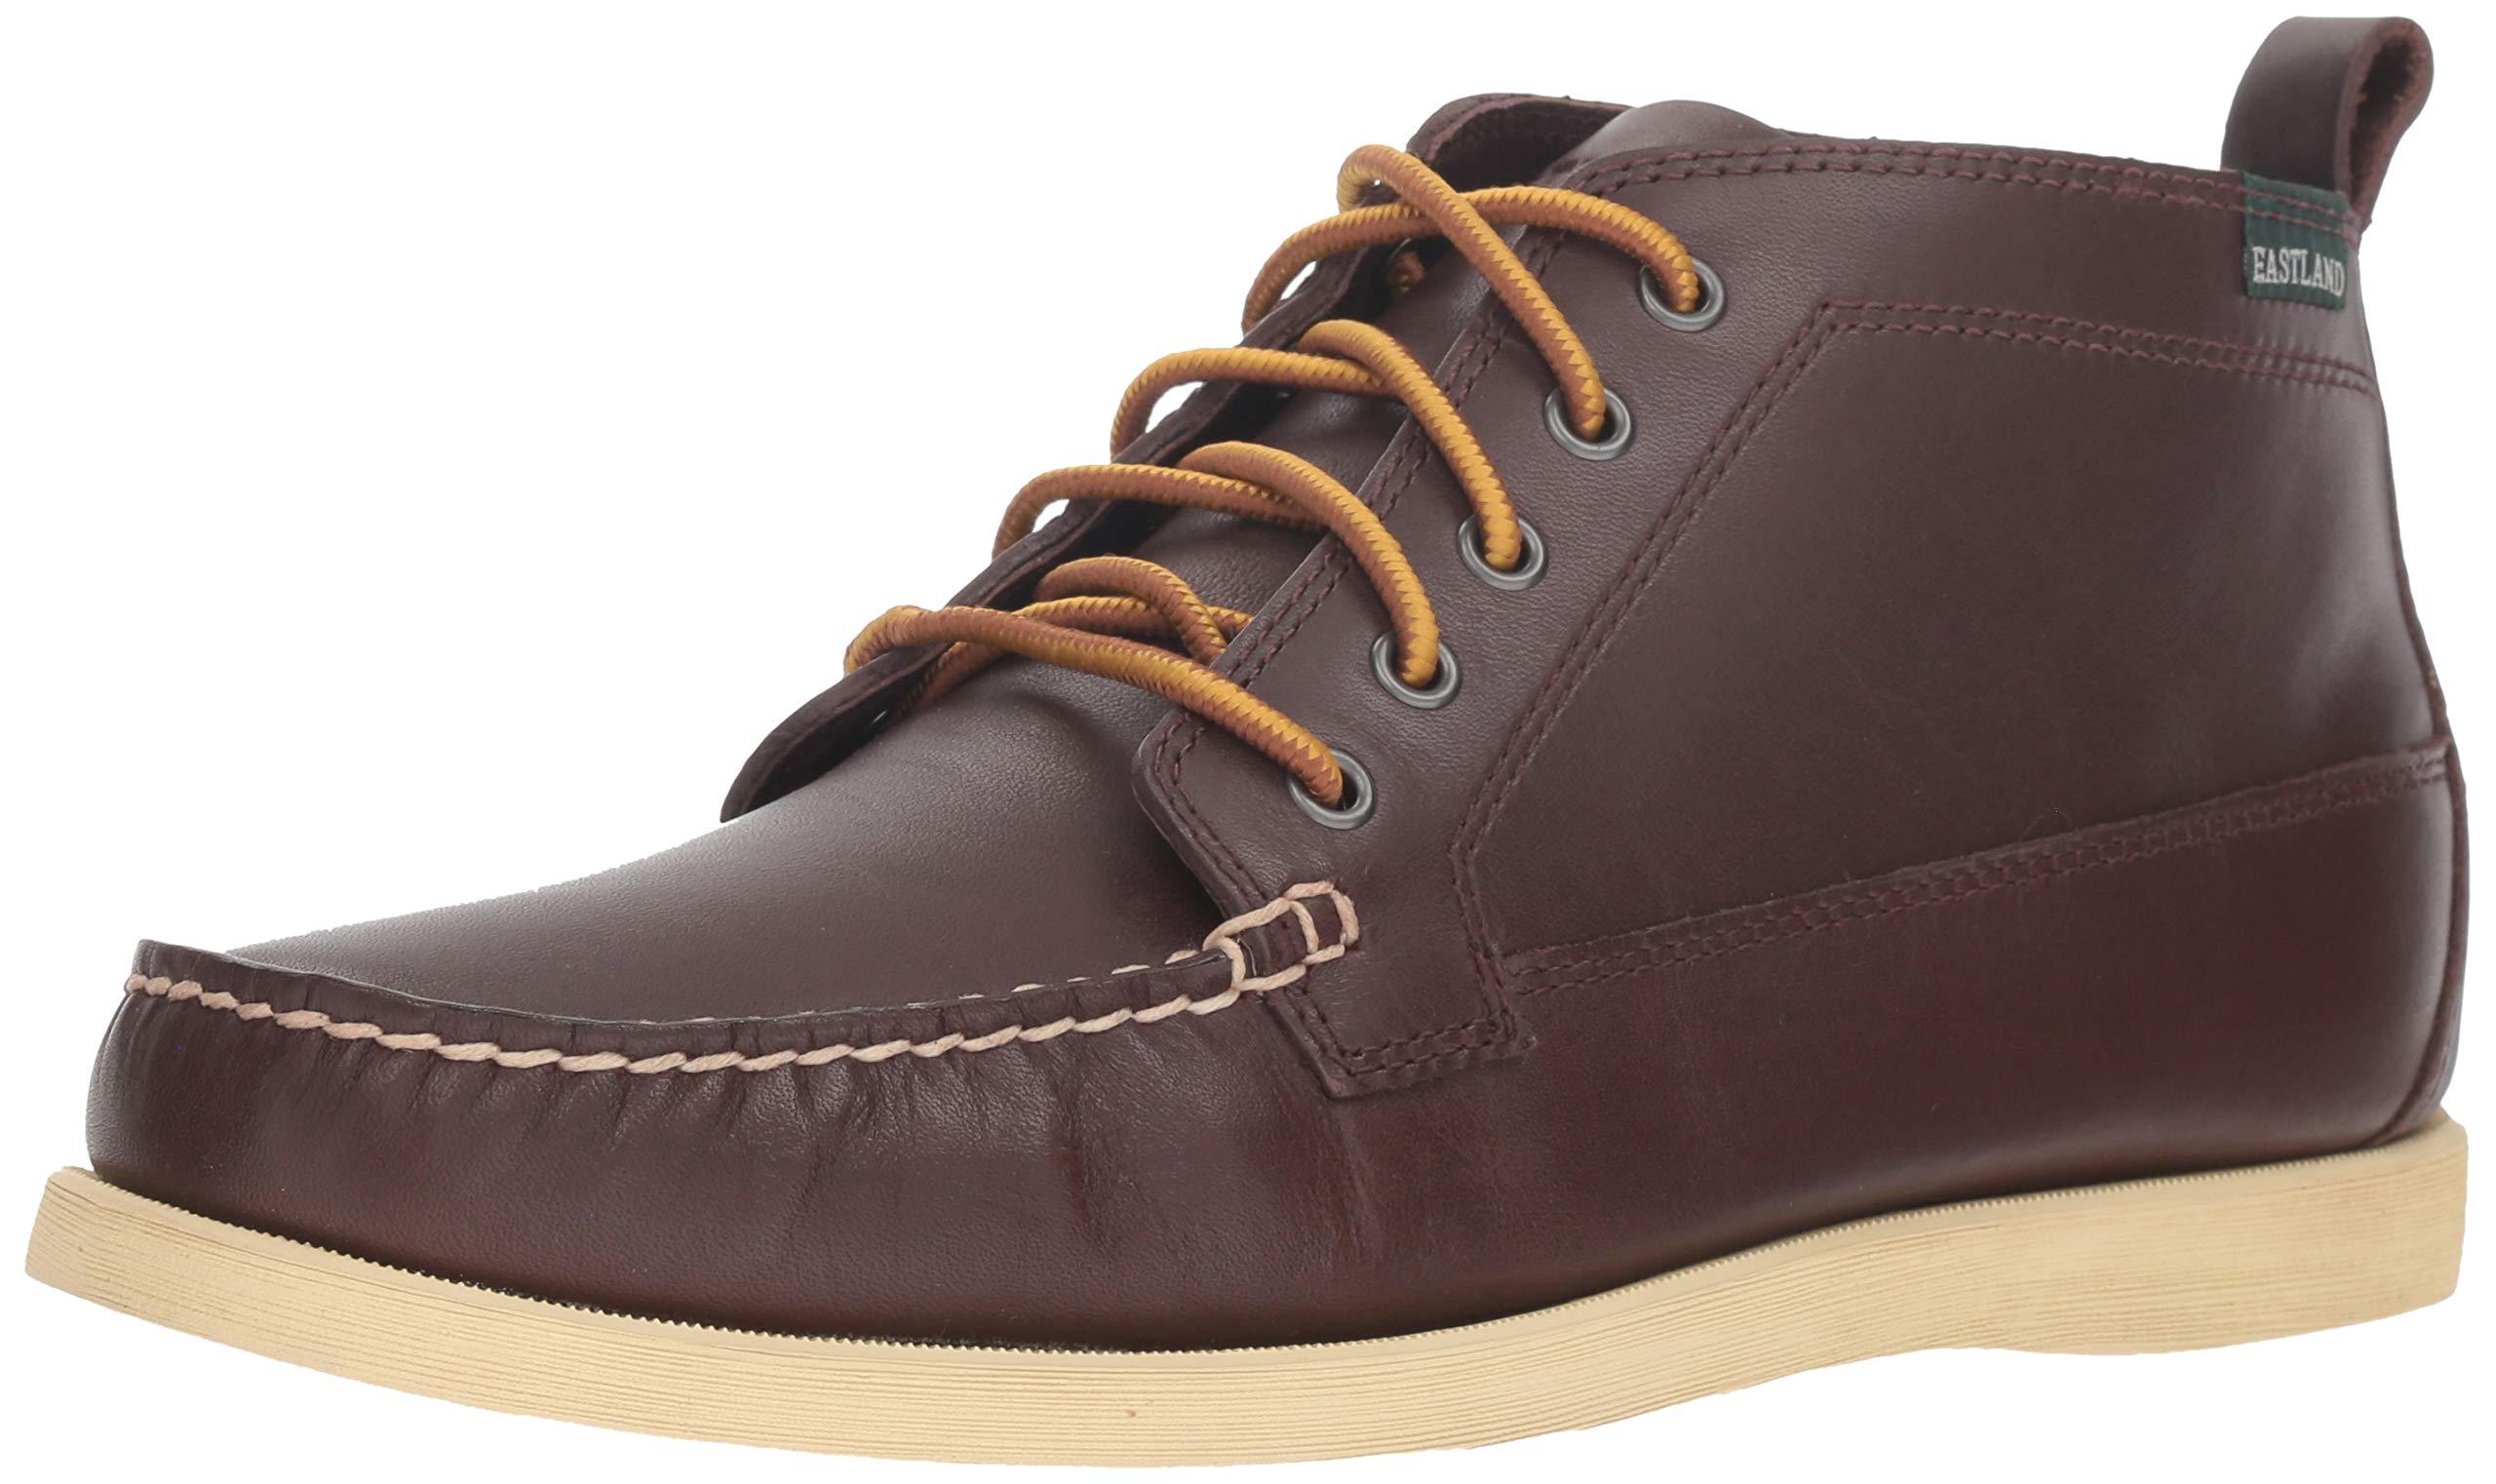 Eastland Leather Seneca Chukka Boot in Dark Brown (Brown) for Men - Lyst